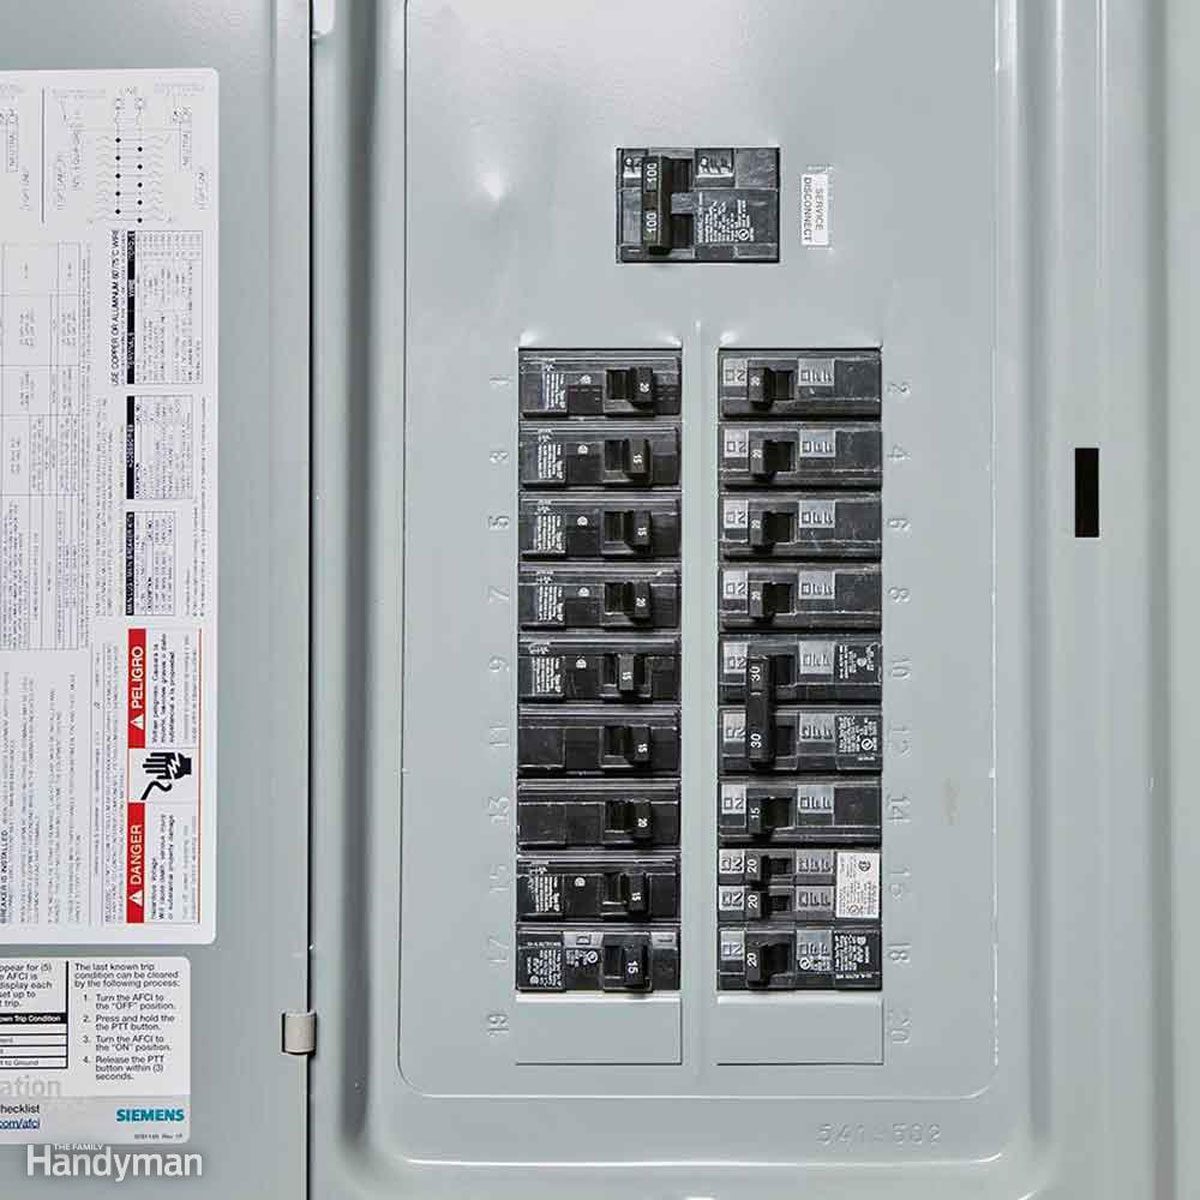 Electrical-panel-fh17mar_576_06_401-1.jpg (1200×1200)